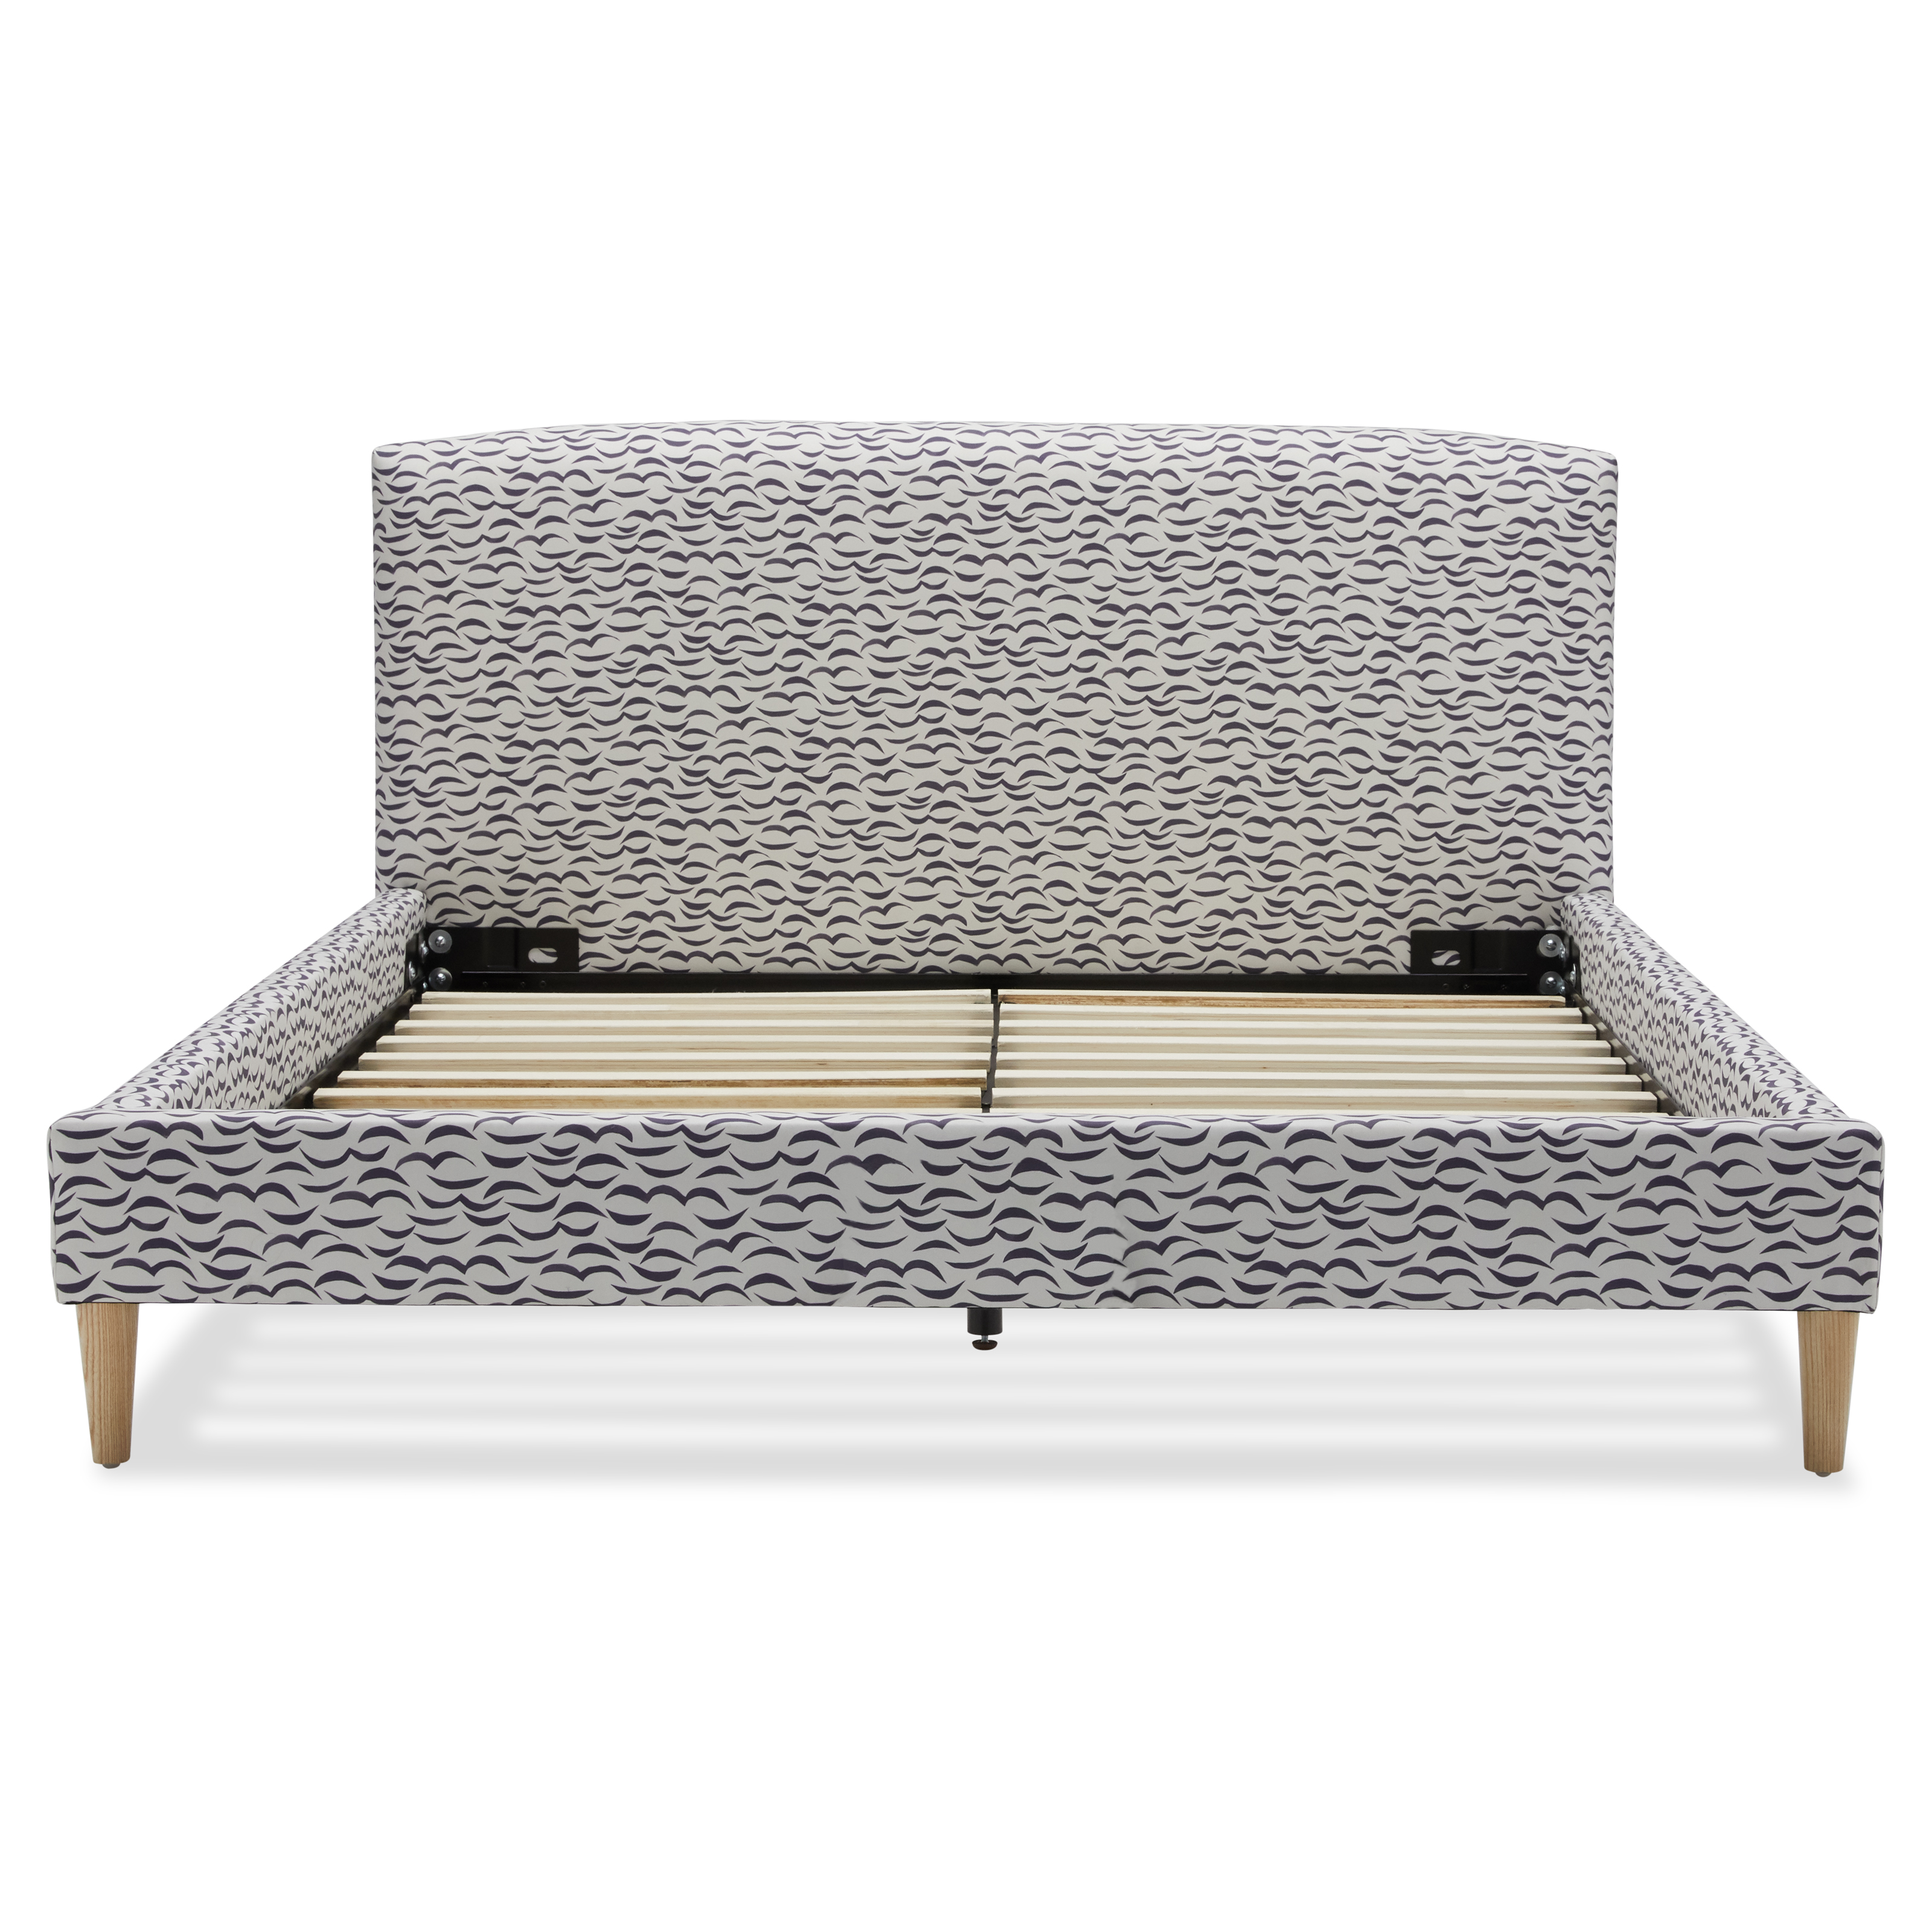 Crescent Moon Upholstered Platform Bed, Multiple Sizes by Drew Barrymore Flower Home - image 5 of 10